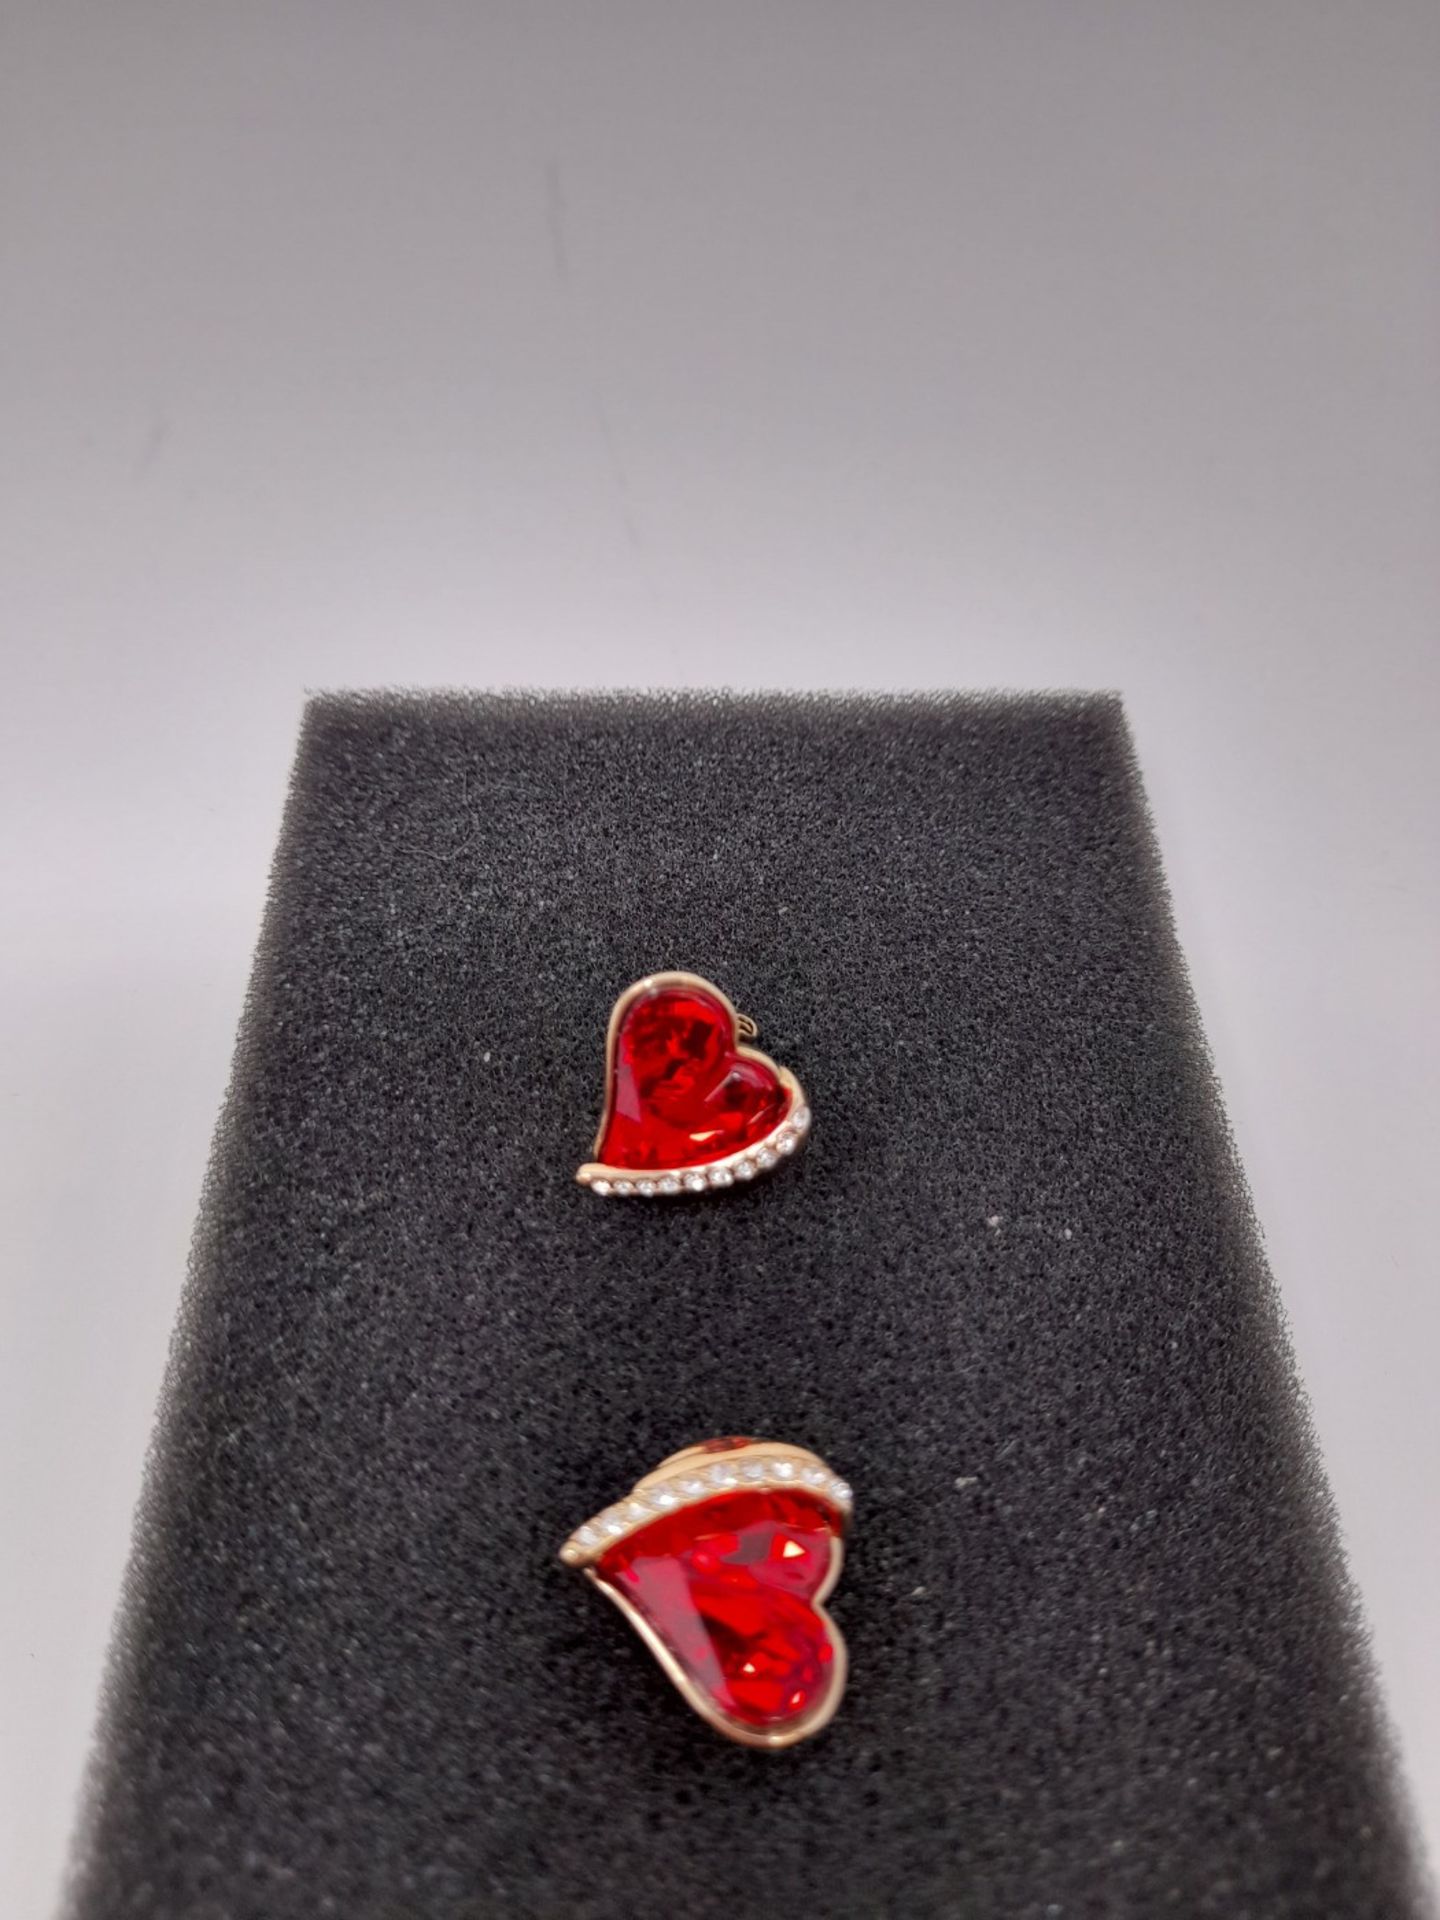 [CRACKED] CDE earrings for women jewelry gift, rose gold heart women's stud earrings, - Image 2 of 2